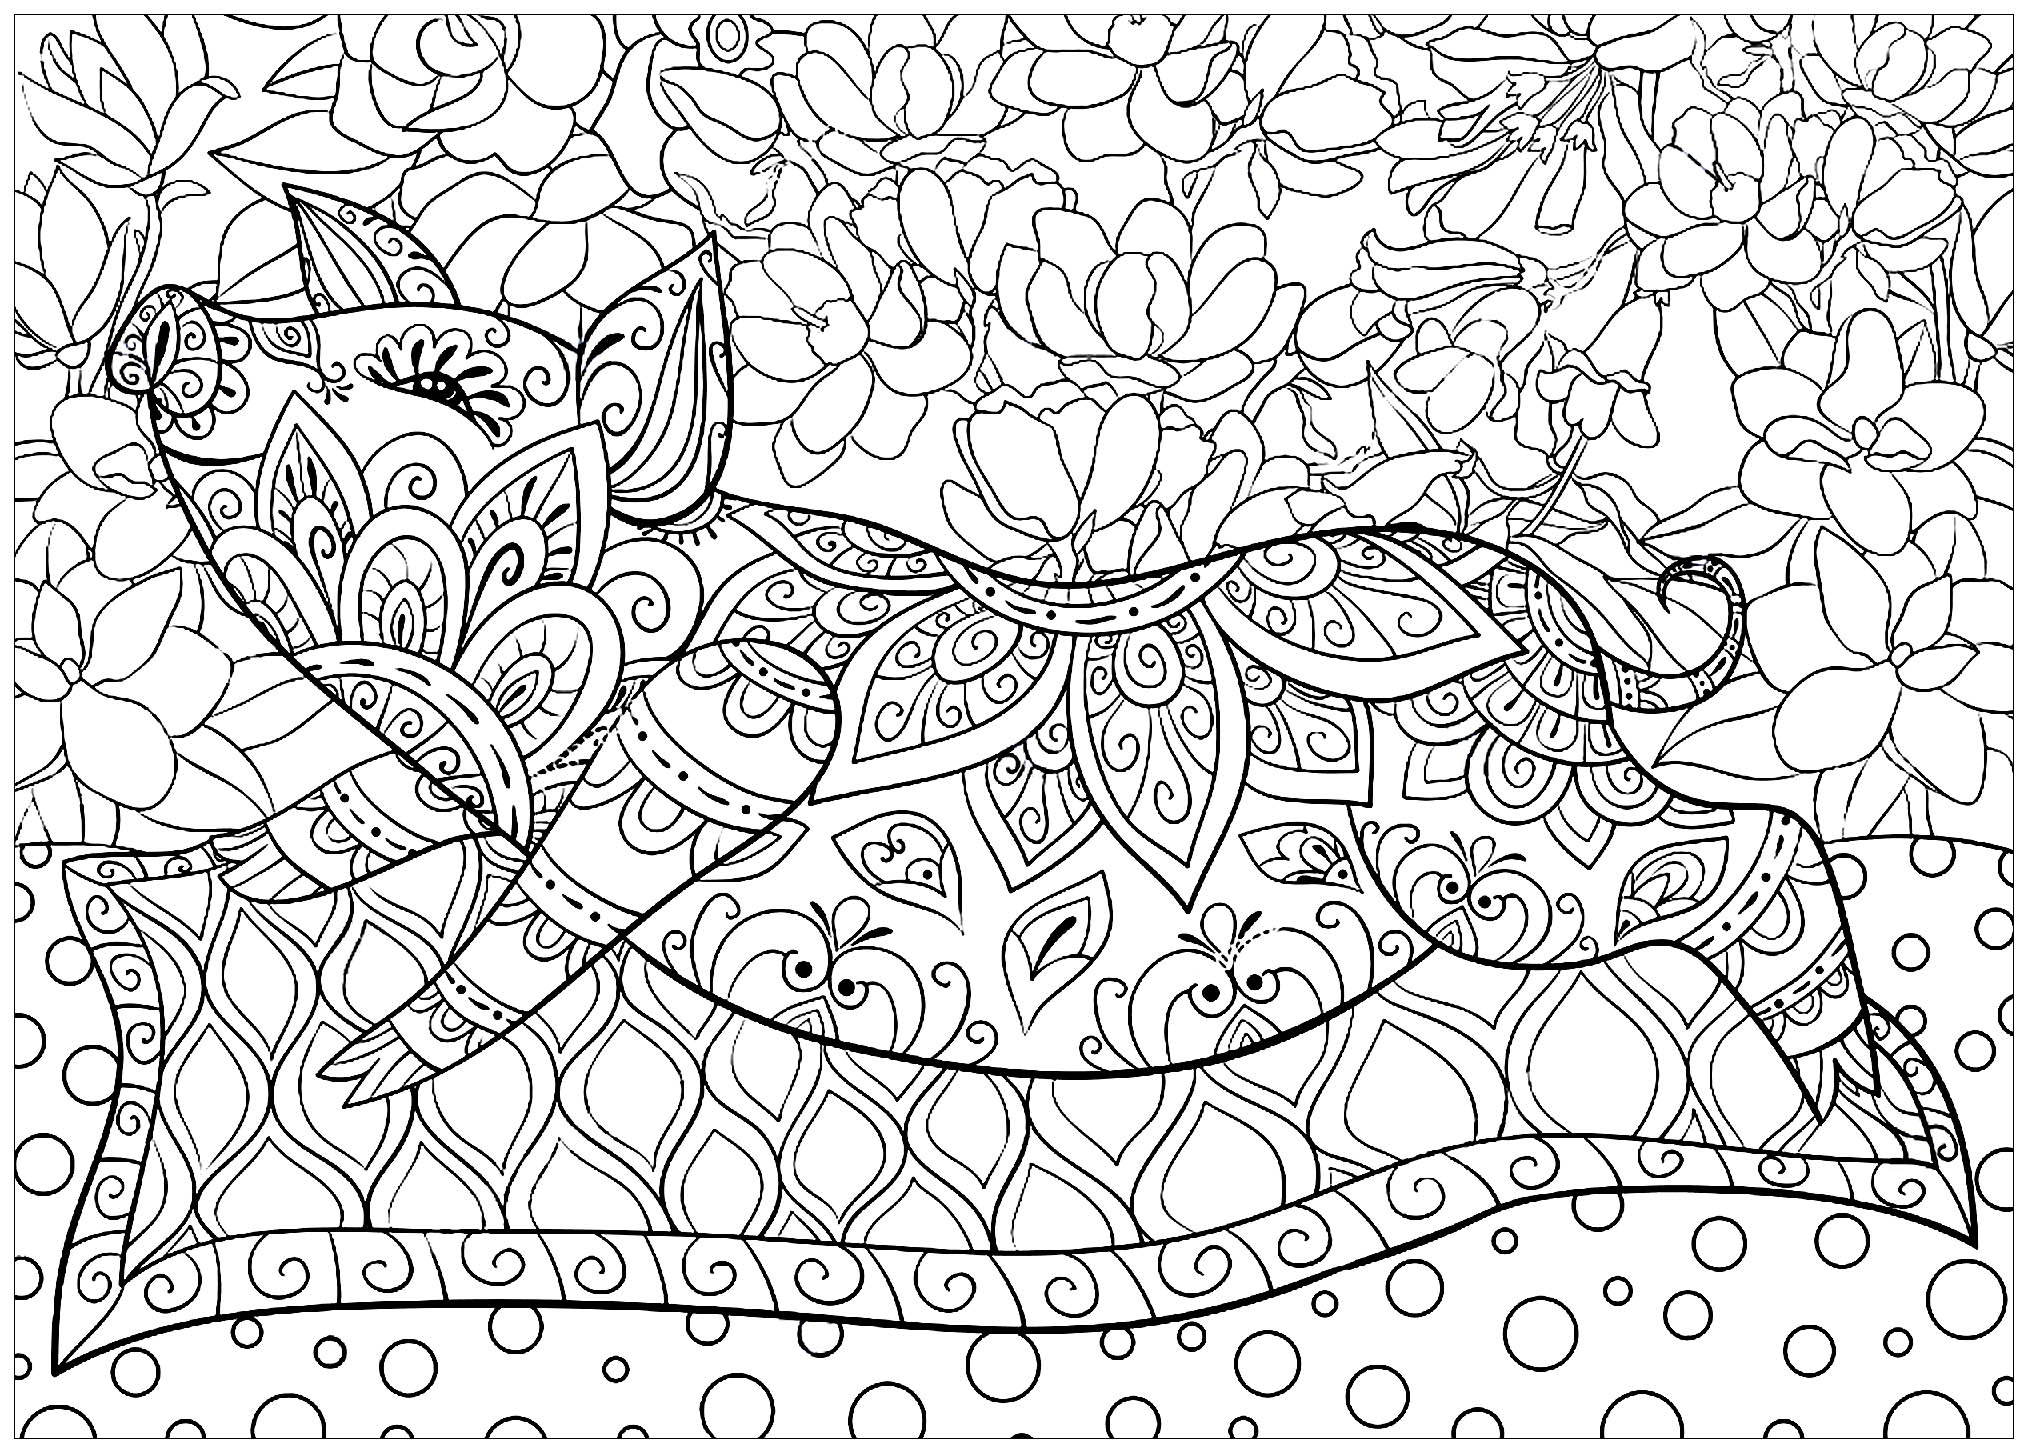 Cochon sur un tapis volant, avec joli fond fleuri, Artiste : Nonuzza   Source : shutterstock